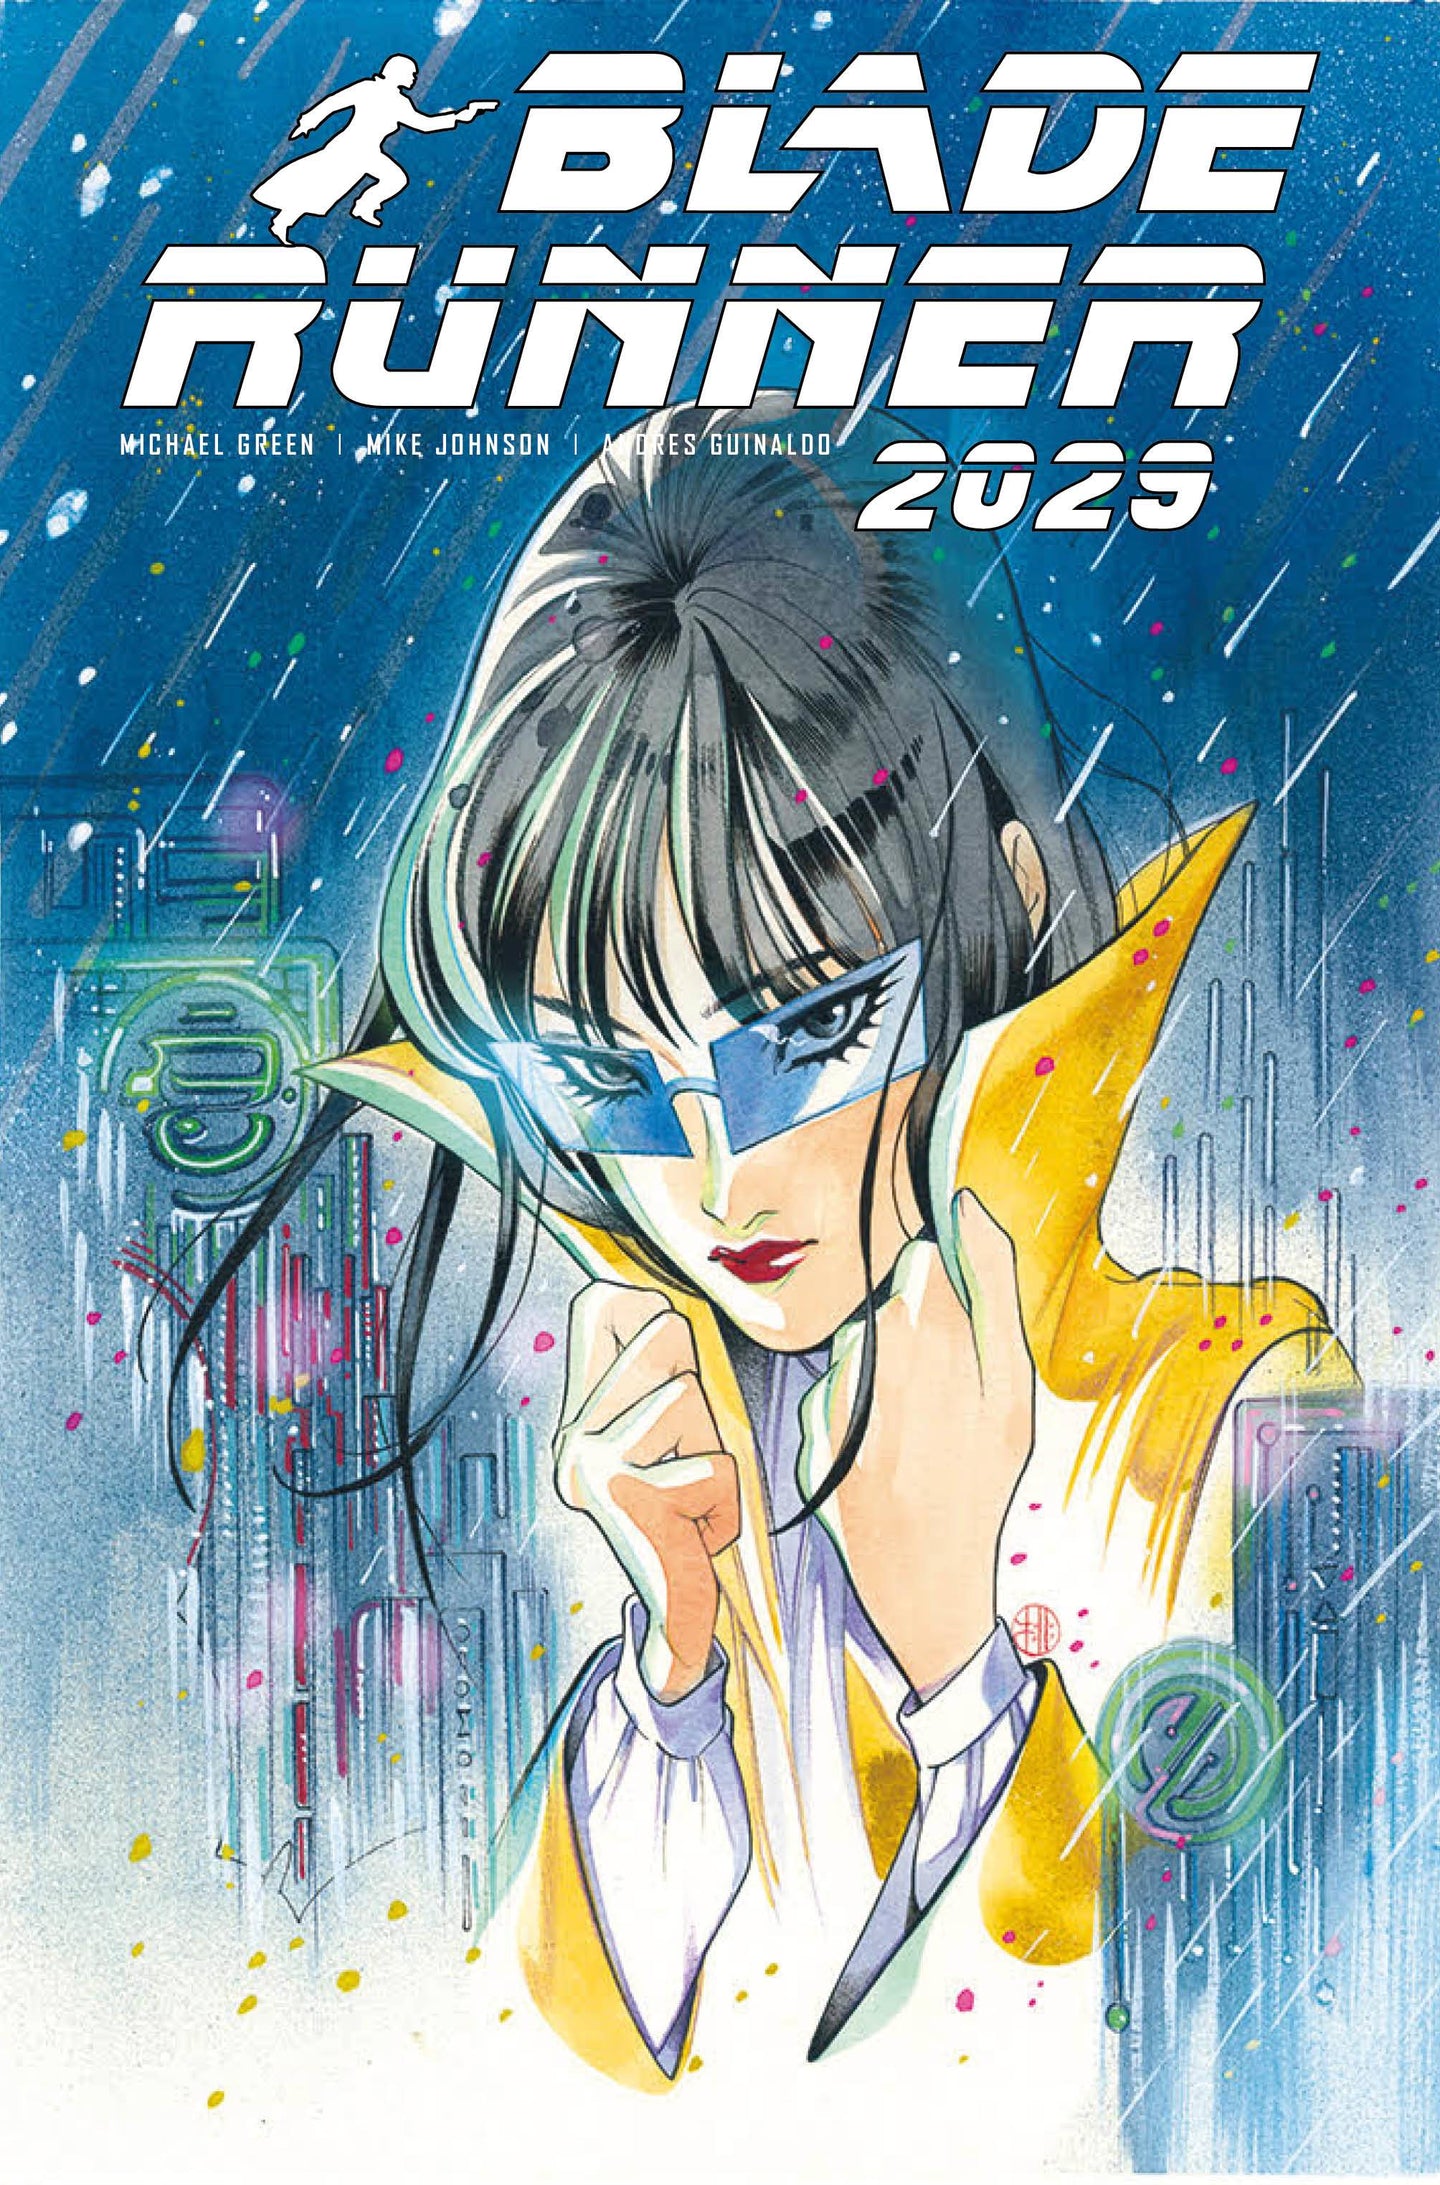 BLADE RUNNER 2029 #1 A PEACH MOMOKO (12/16/2020) TITAN